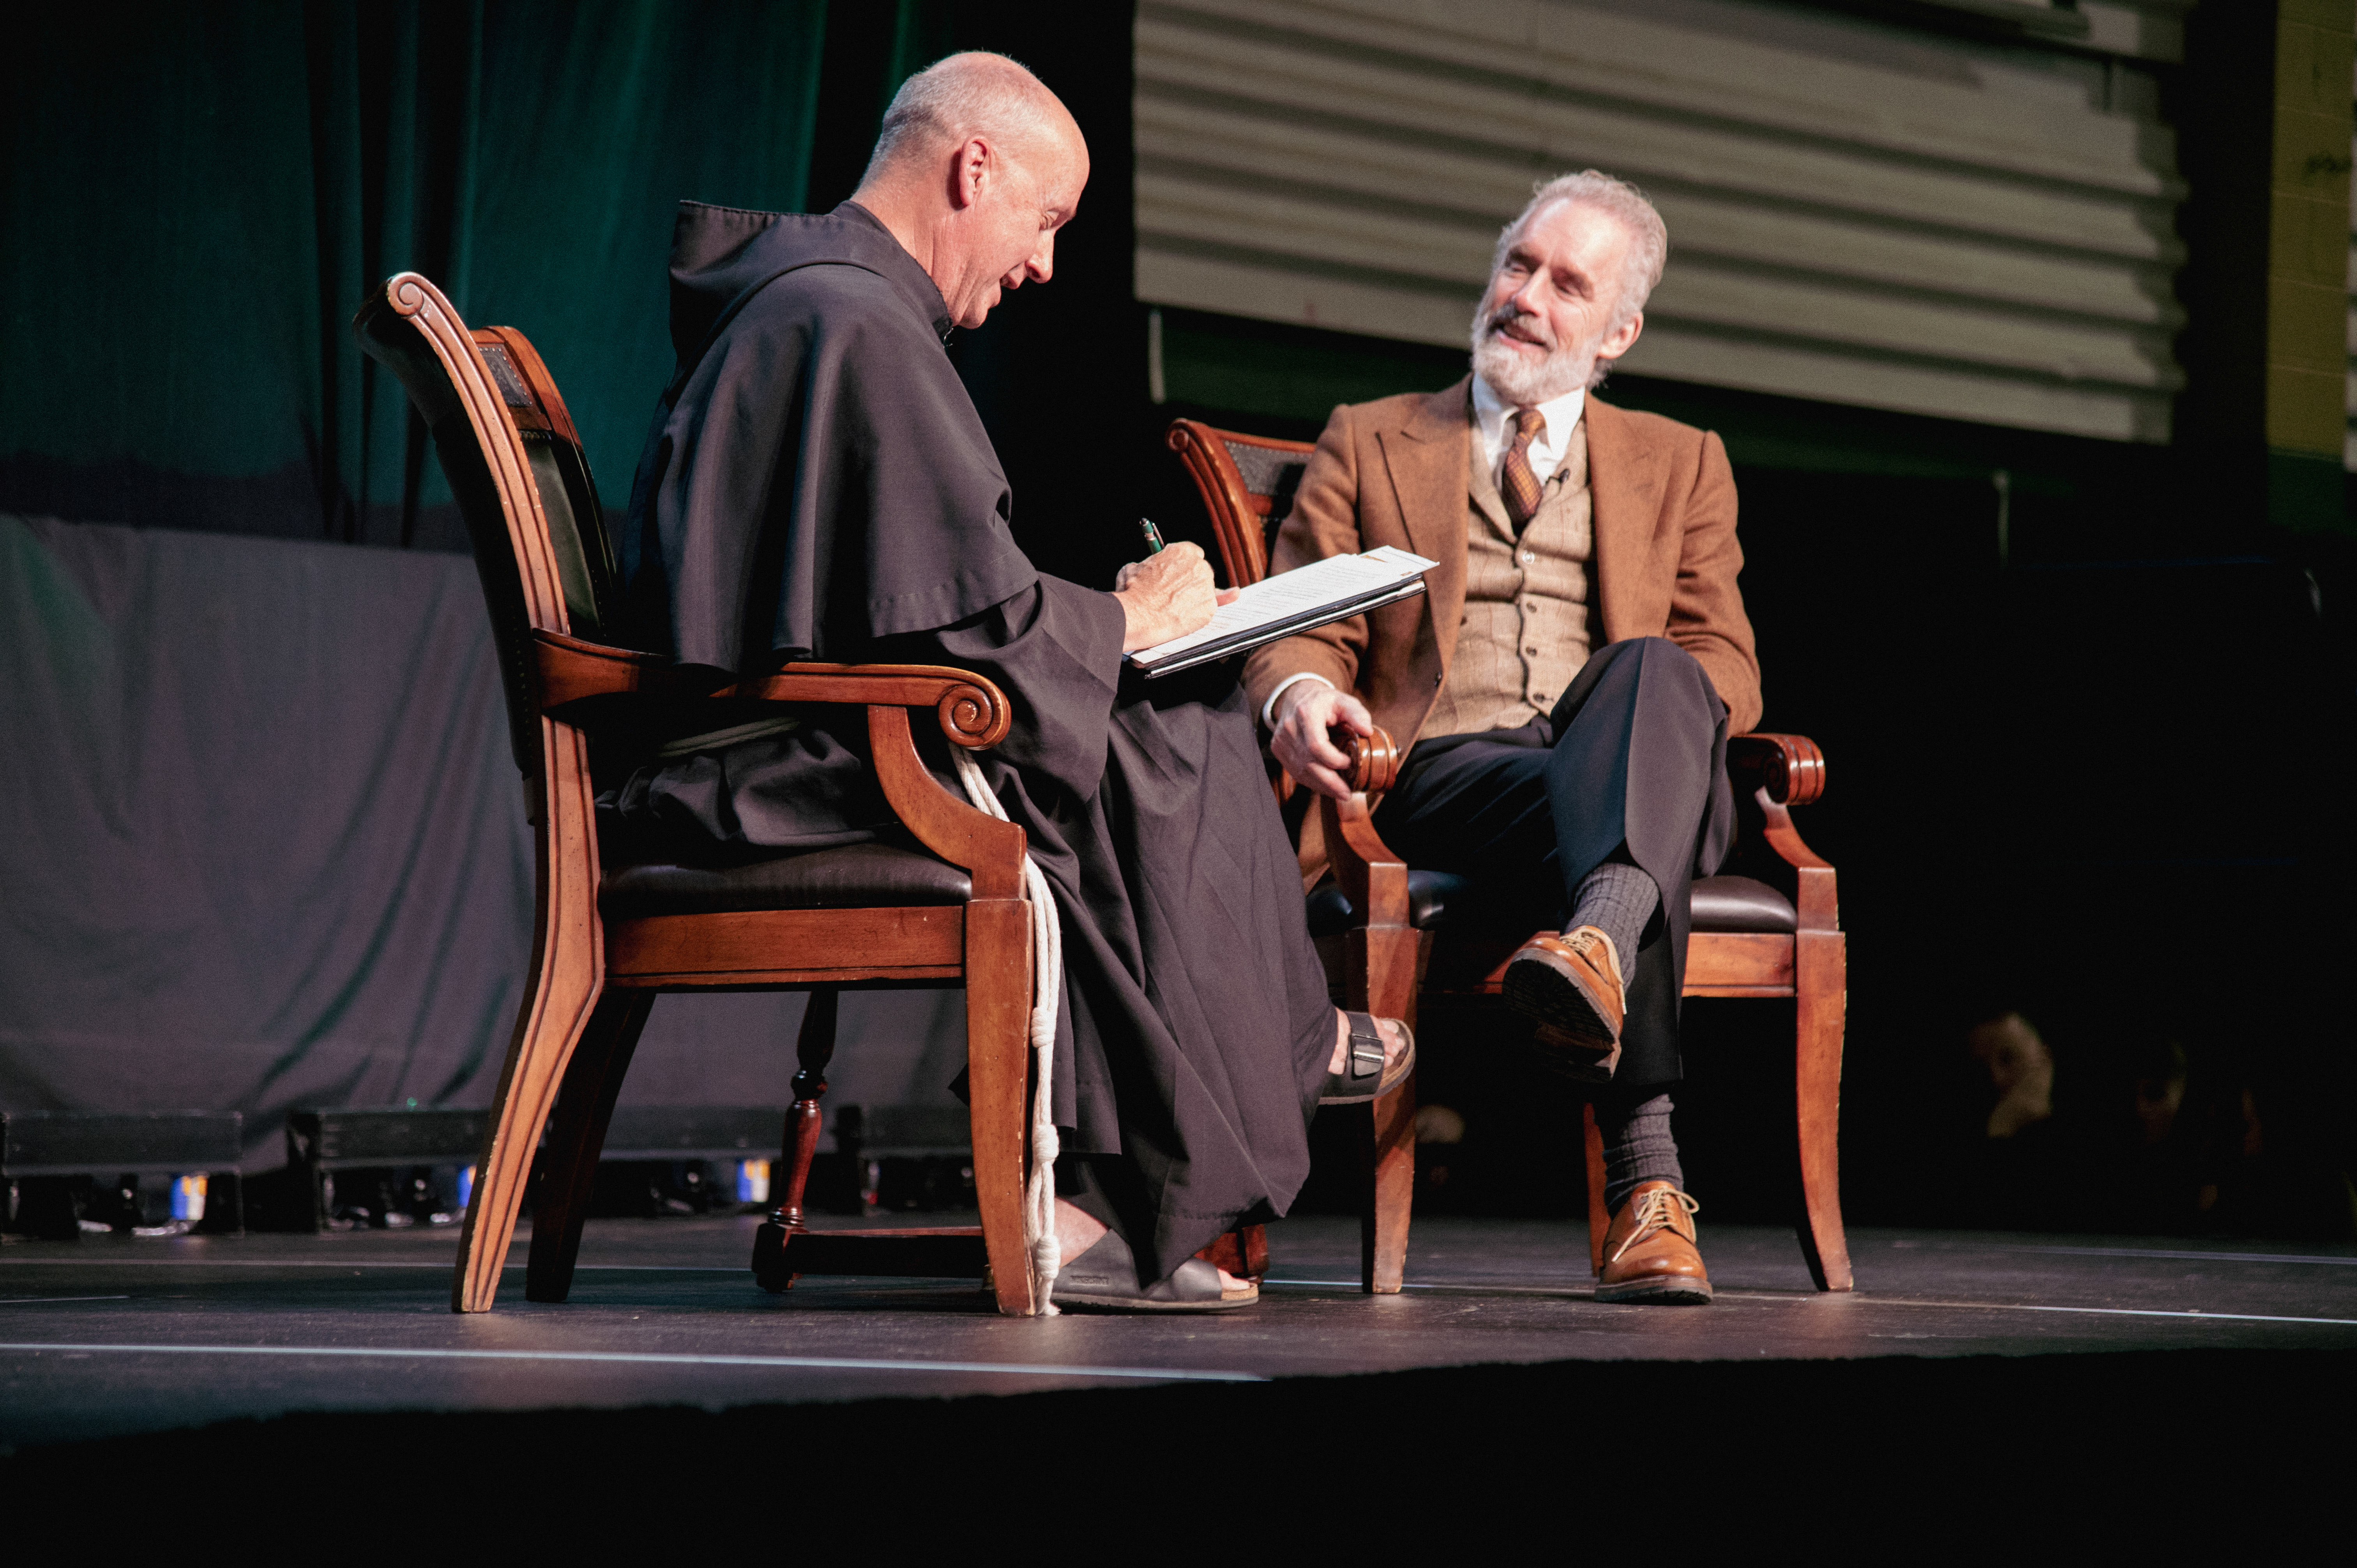 Dr. Jordan Peterson Speaks at Franciscan University of Steubenville